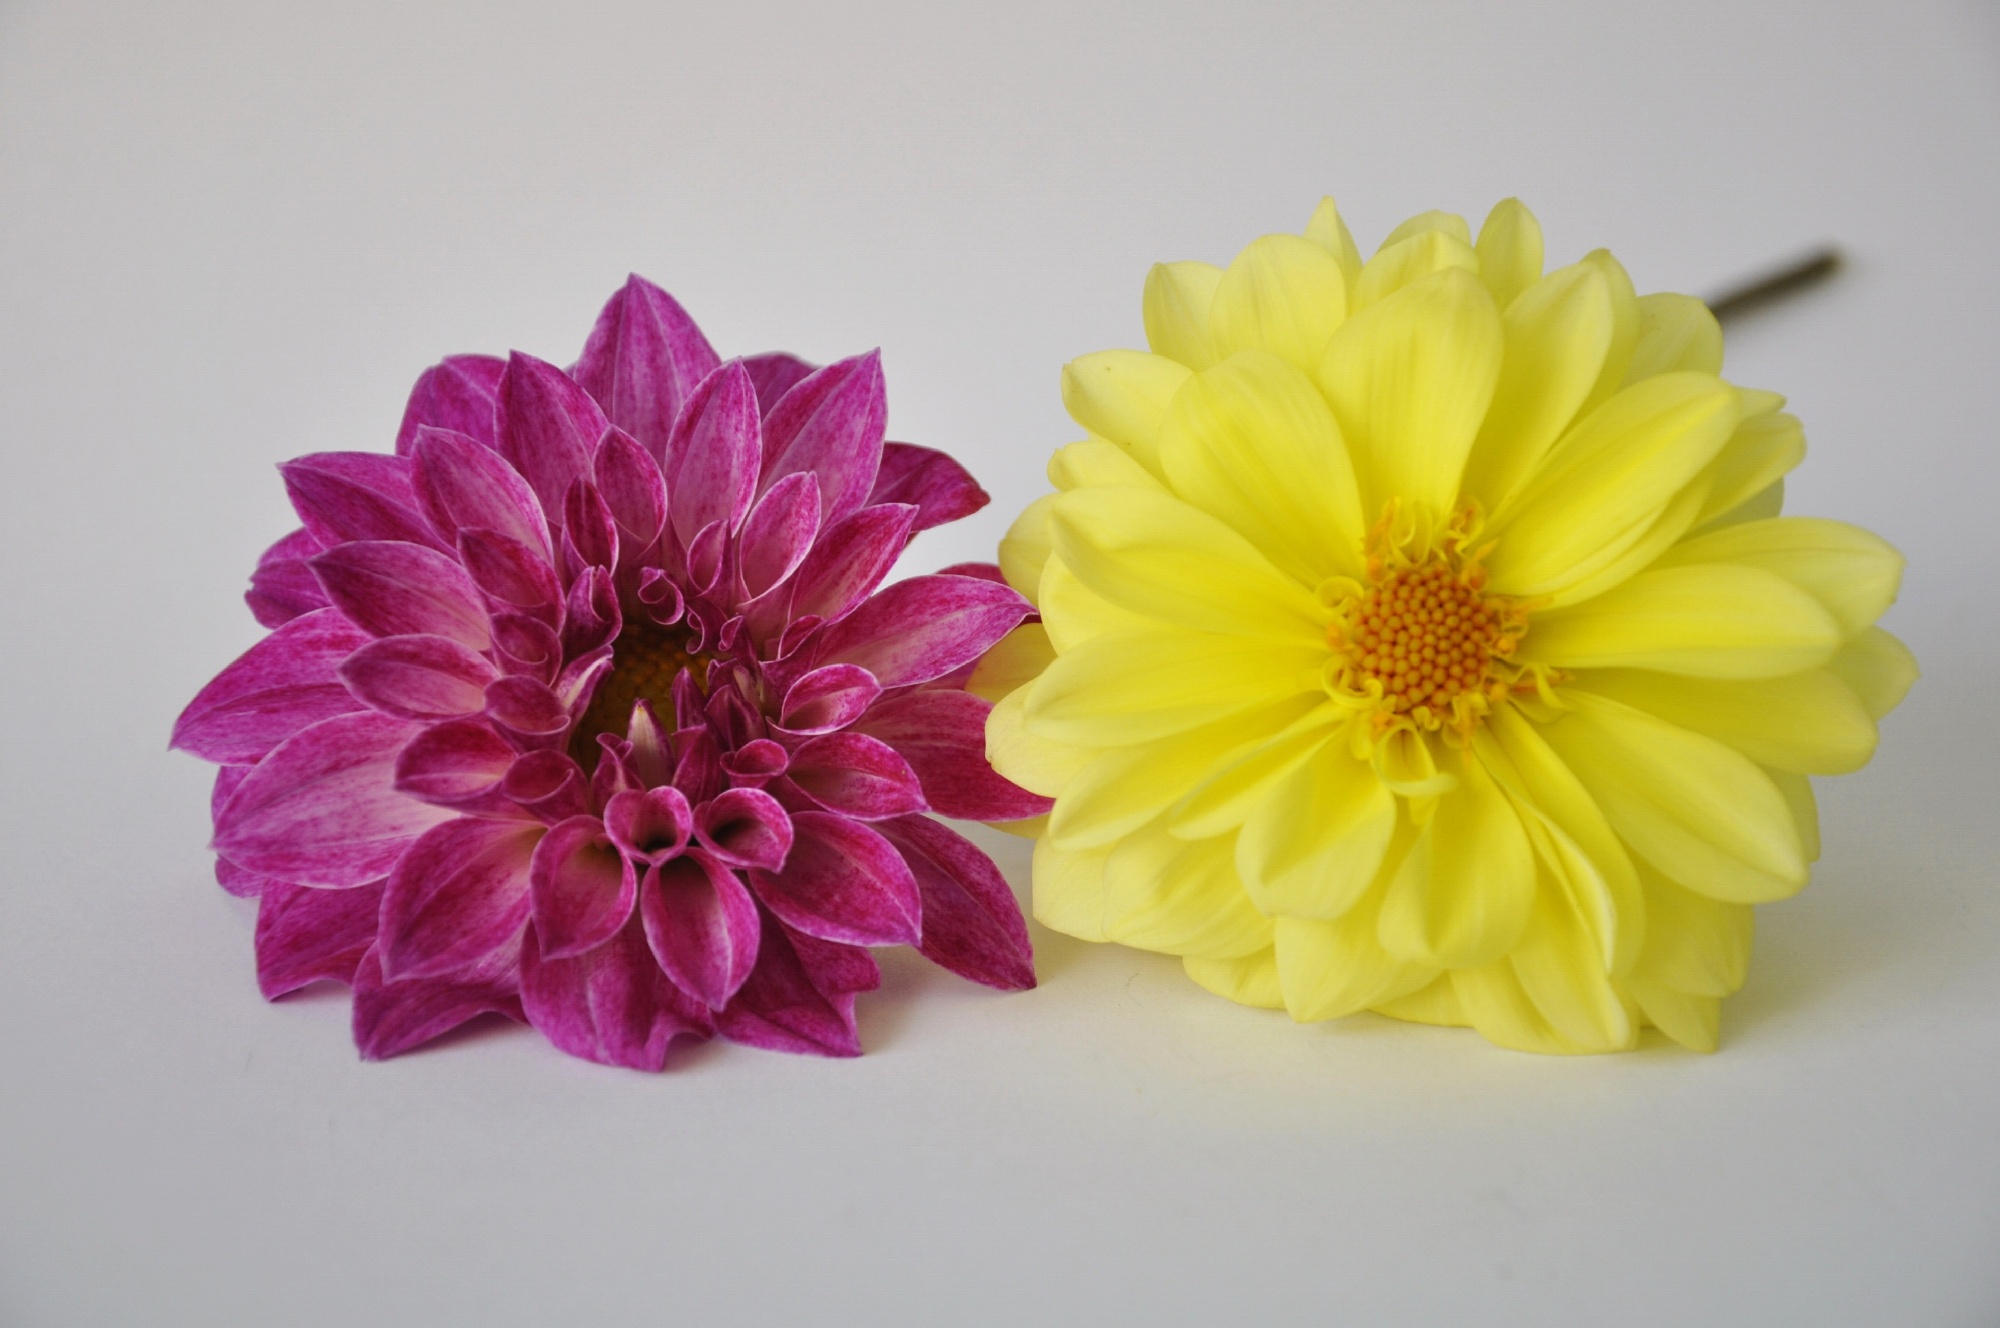 Two beautiful flowers photo